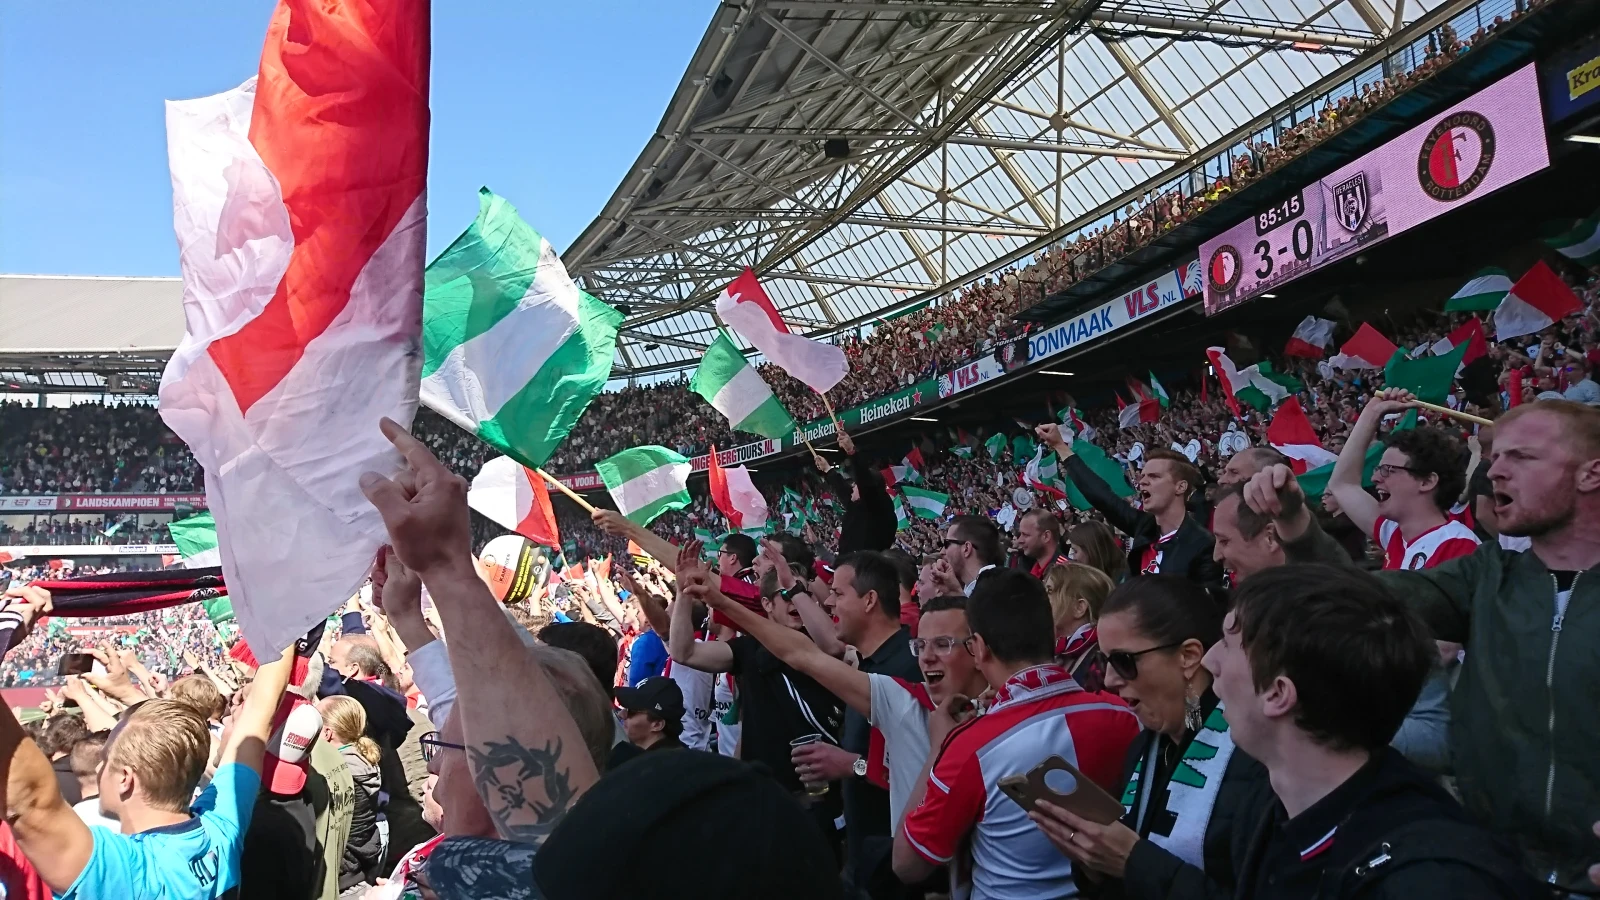 'Klein groepje Feyenoord-supporters probeert stadion binnen te komen'